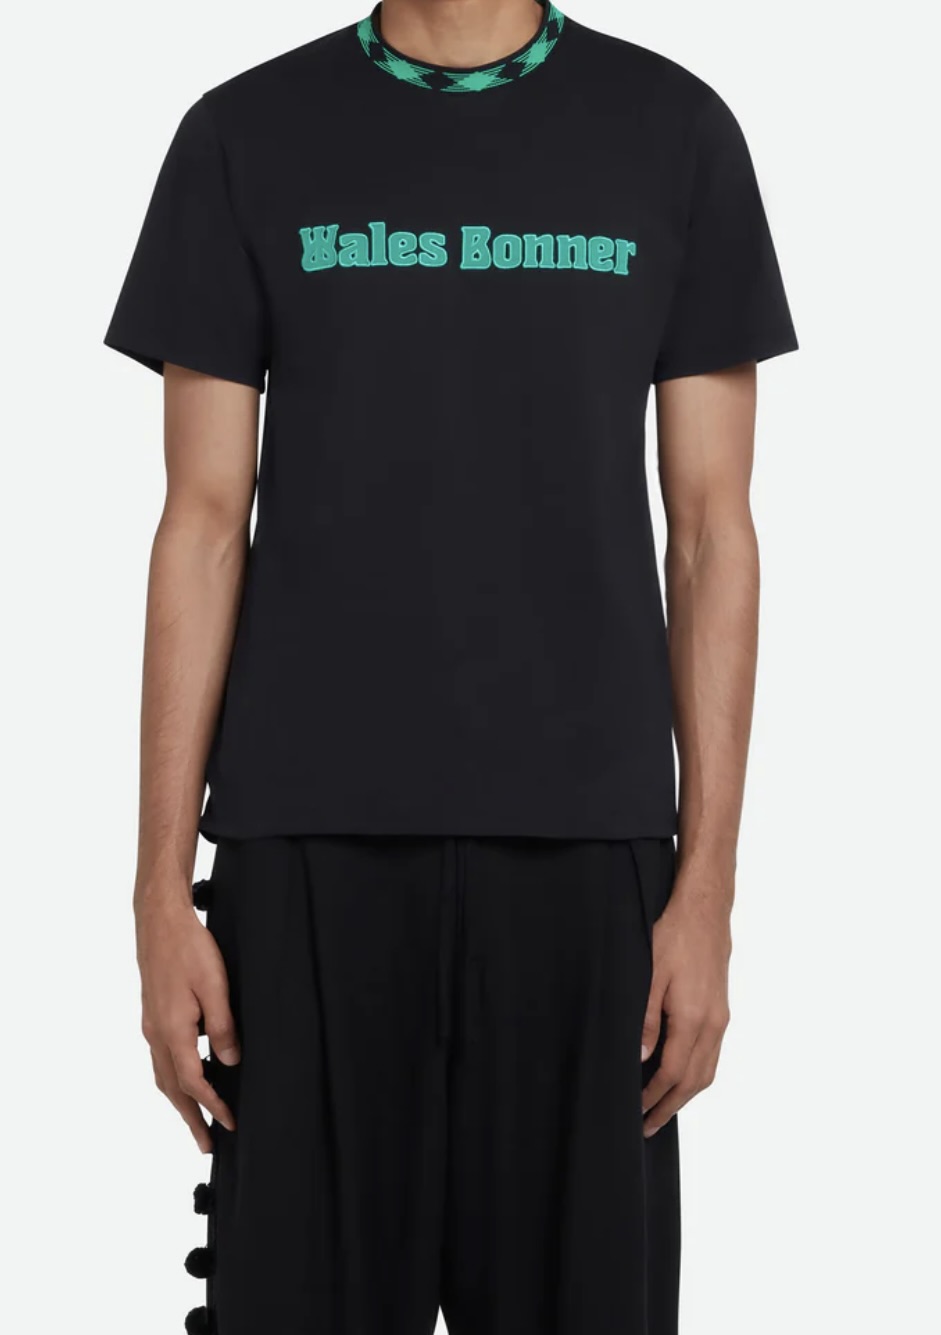 WALES BONNER ORIGINAL T-SHIRT